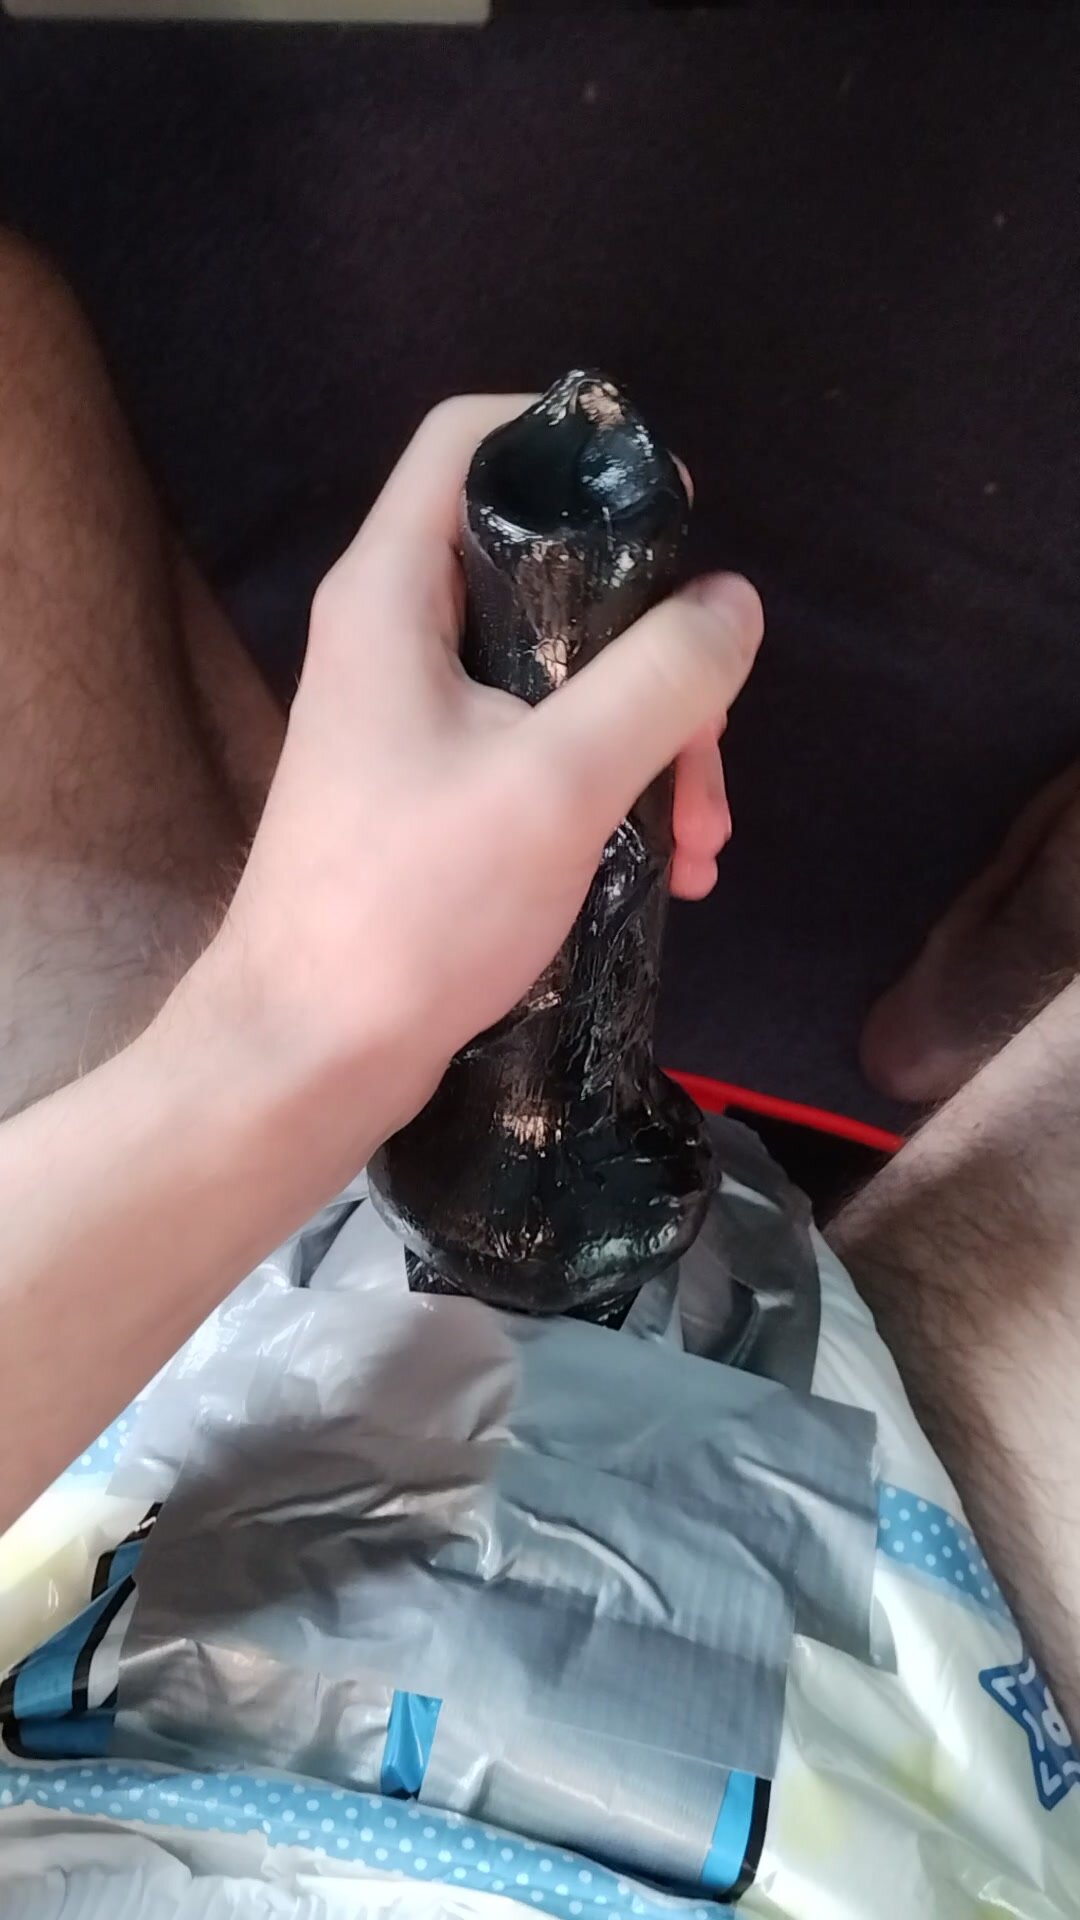 Diaper boy strokes his new cock